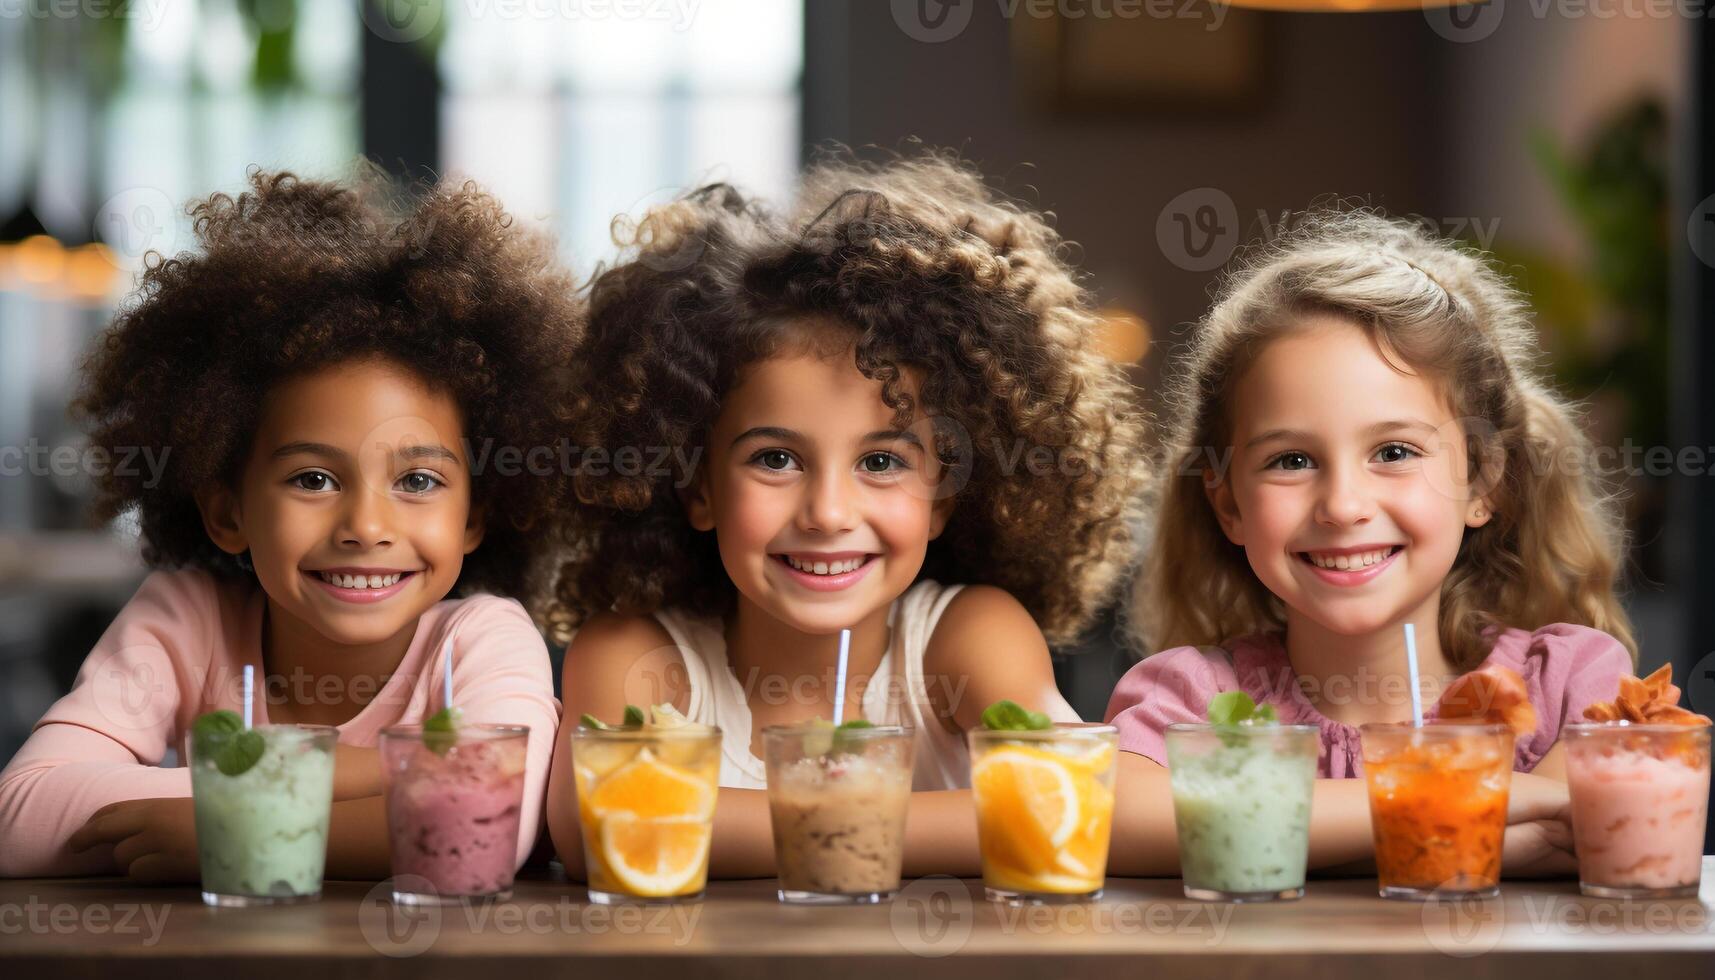 AI generated Smiling girls, cheerful boys, cute children enjoying fresh summer fruit generated by AI photo